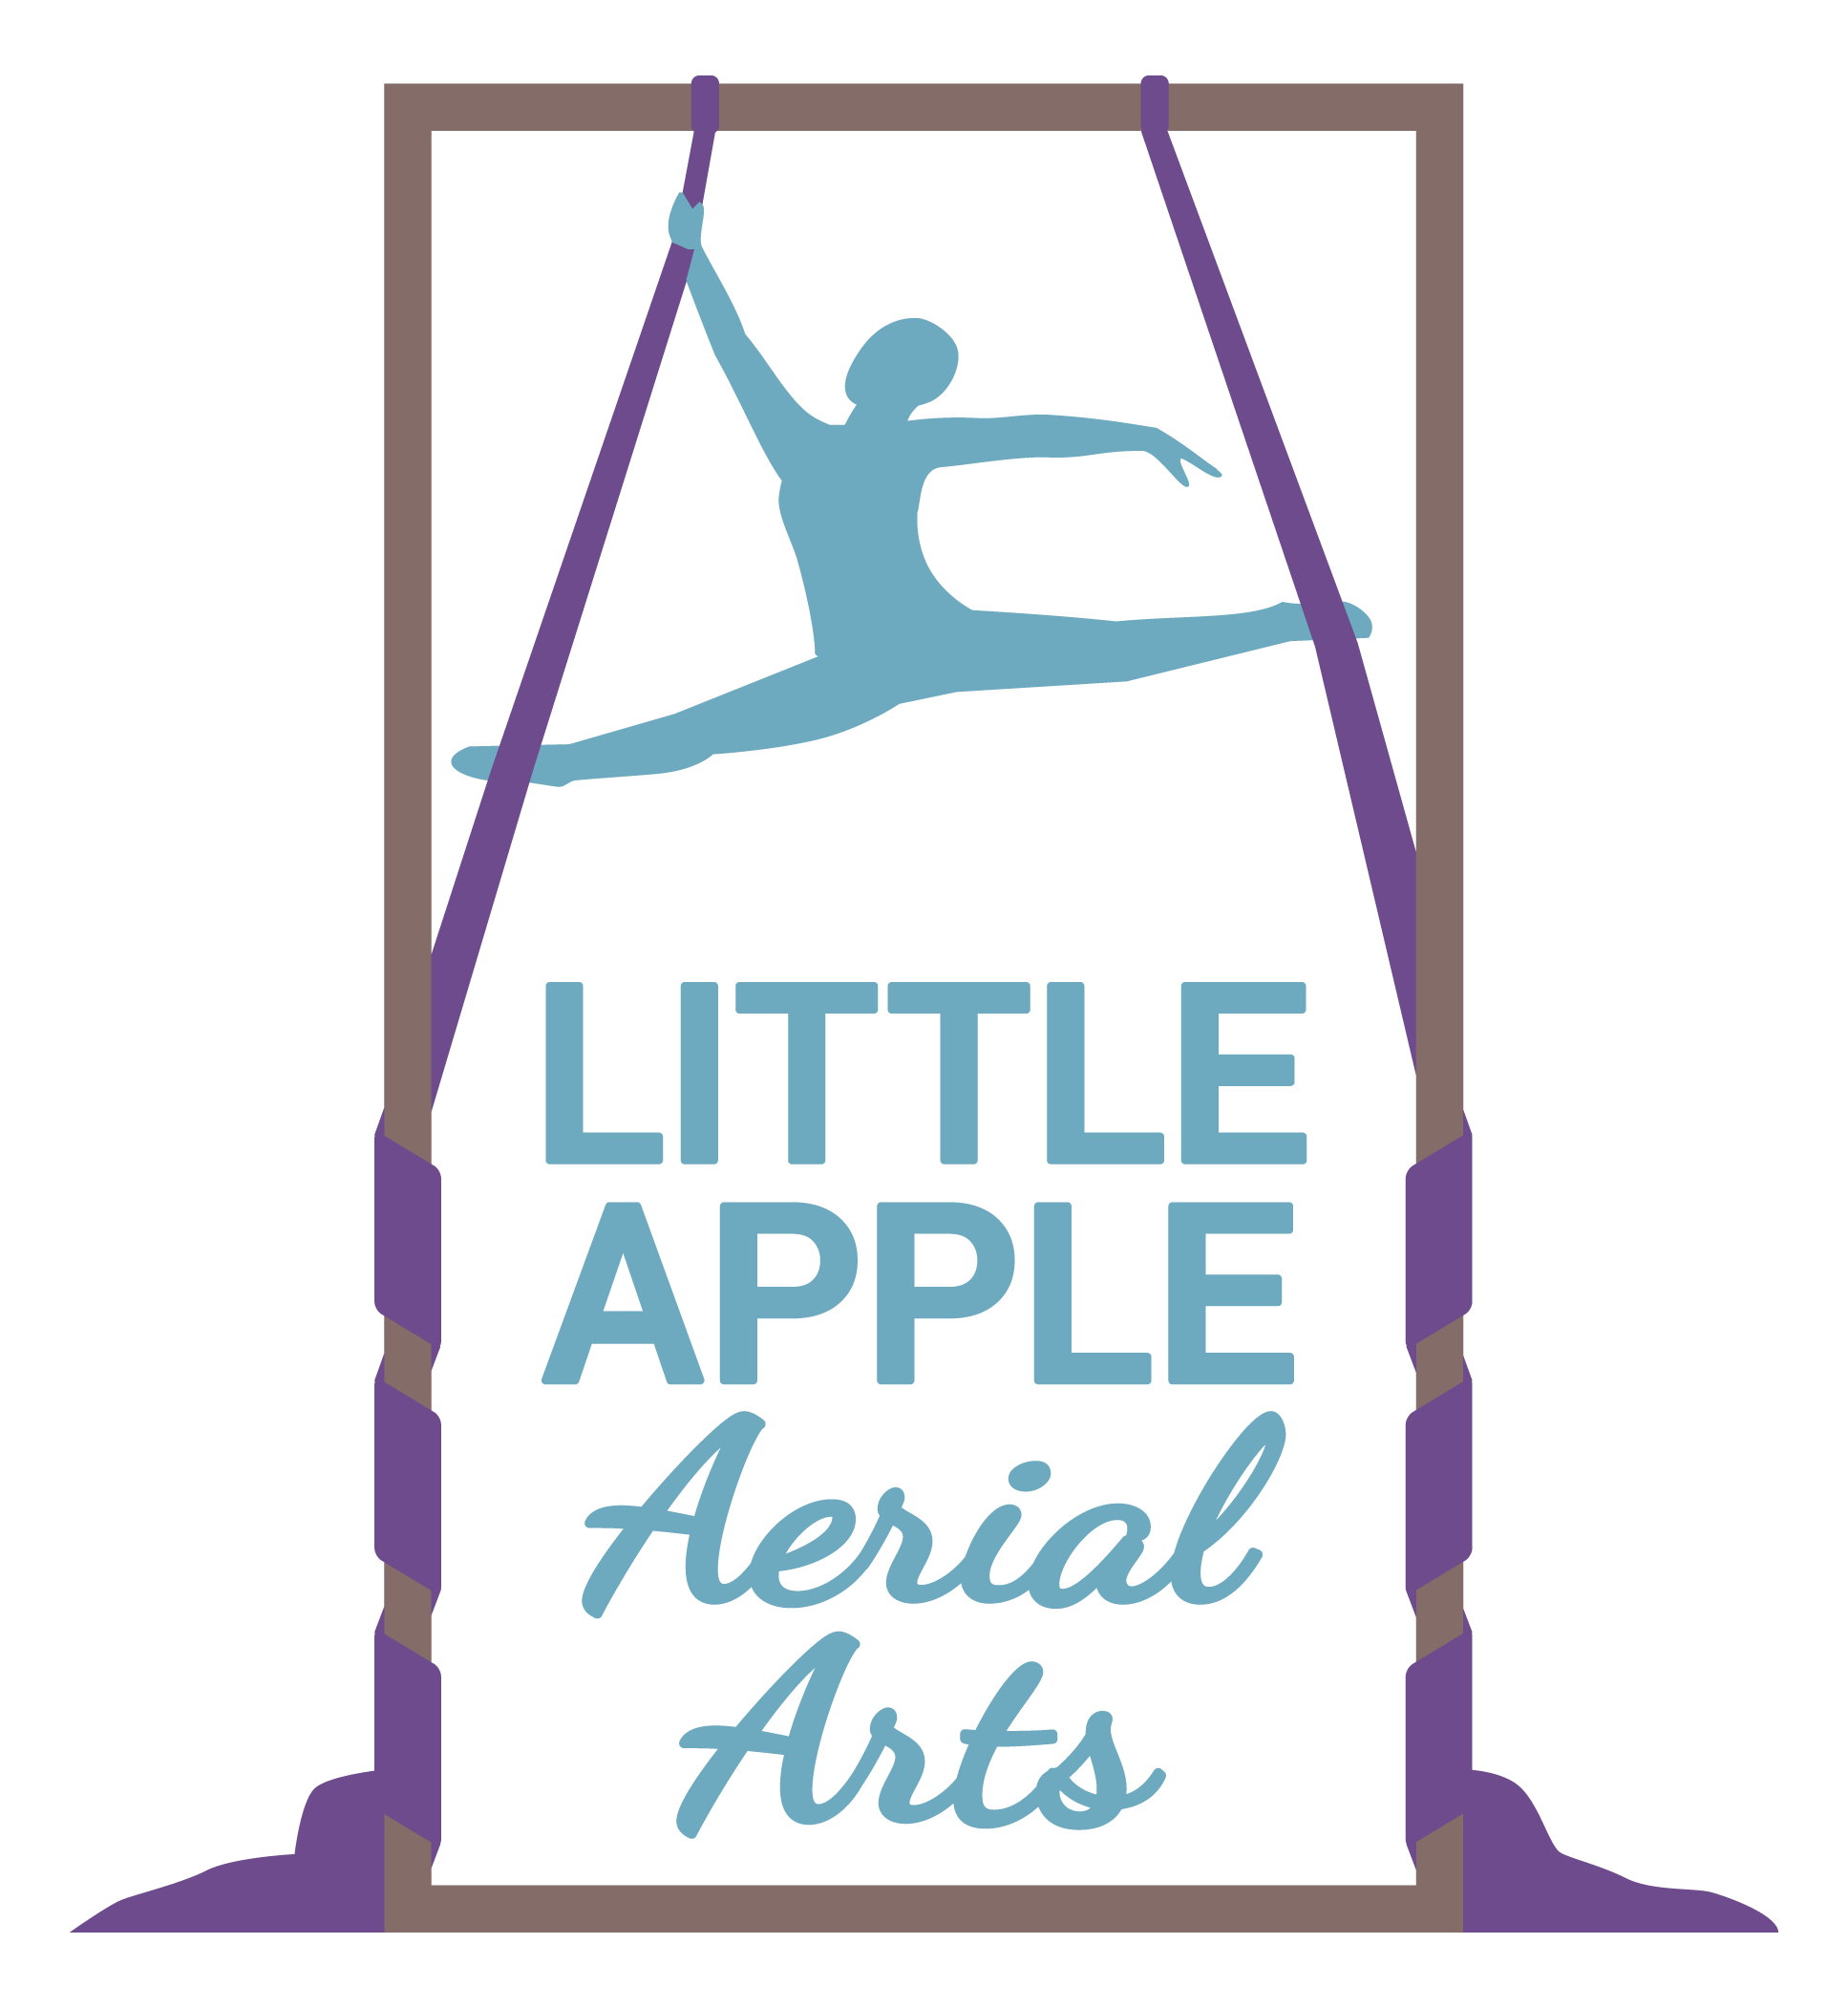 Little Apple Aerials Arts